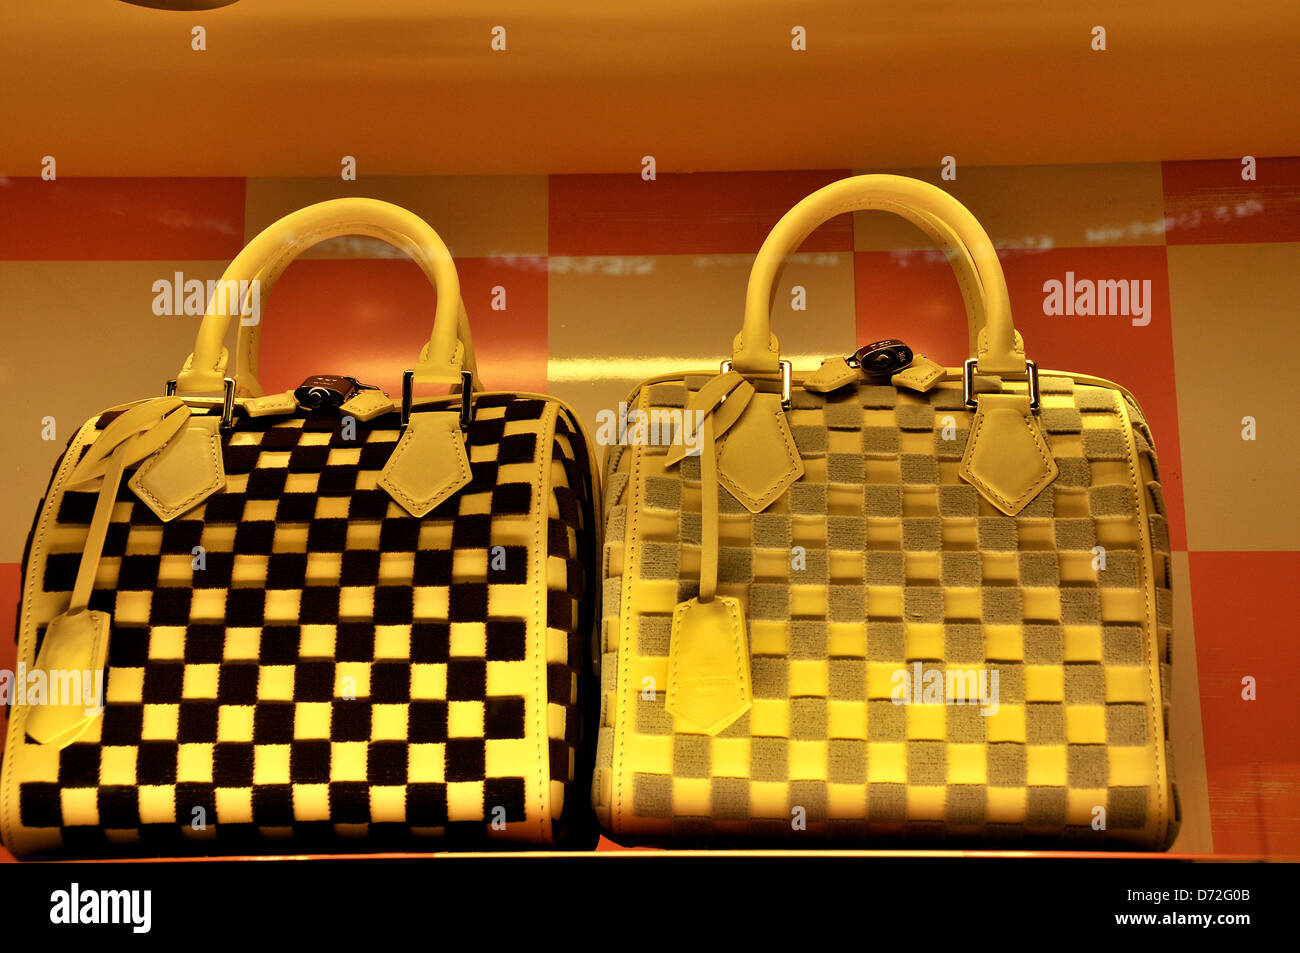 1,263 Louis Vuitton Bag Stock Photos - Free & Royalty-Free Stock Photos  from Dreamstime